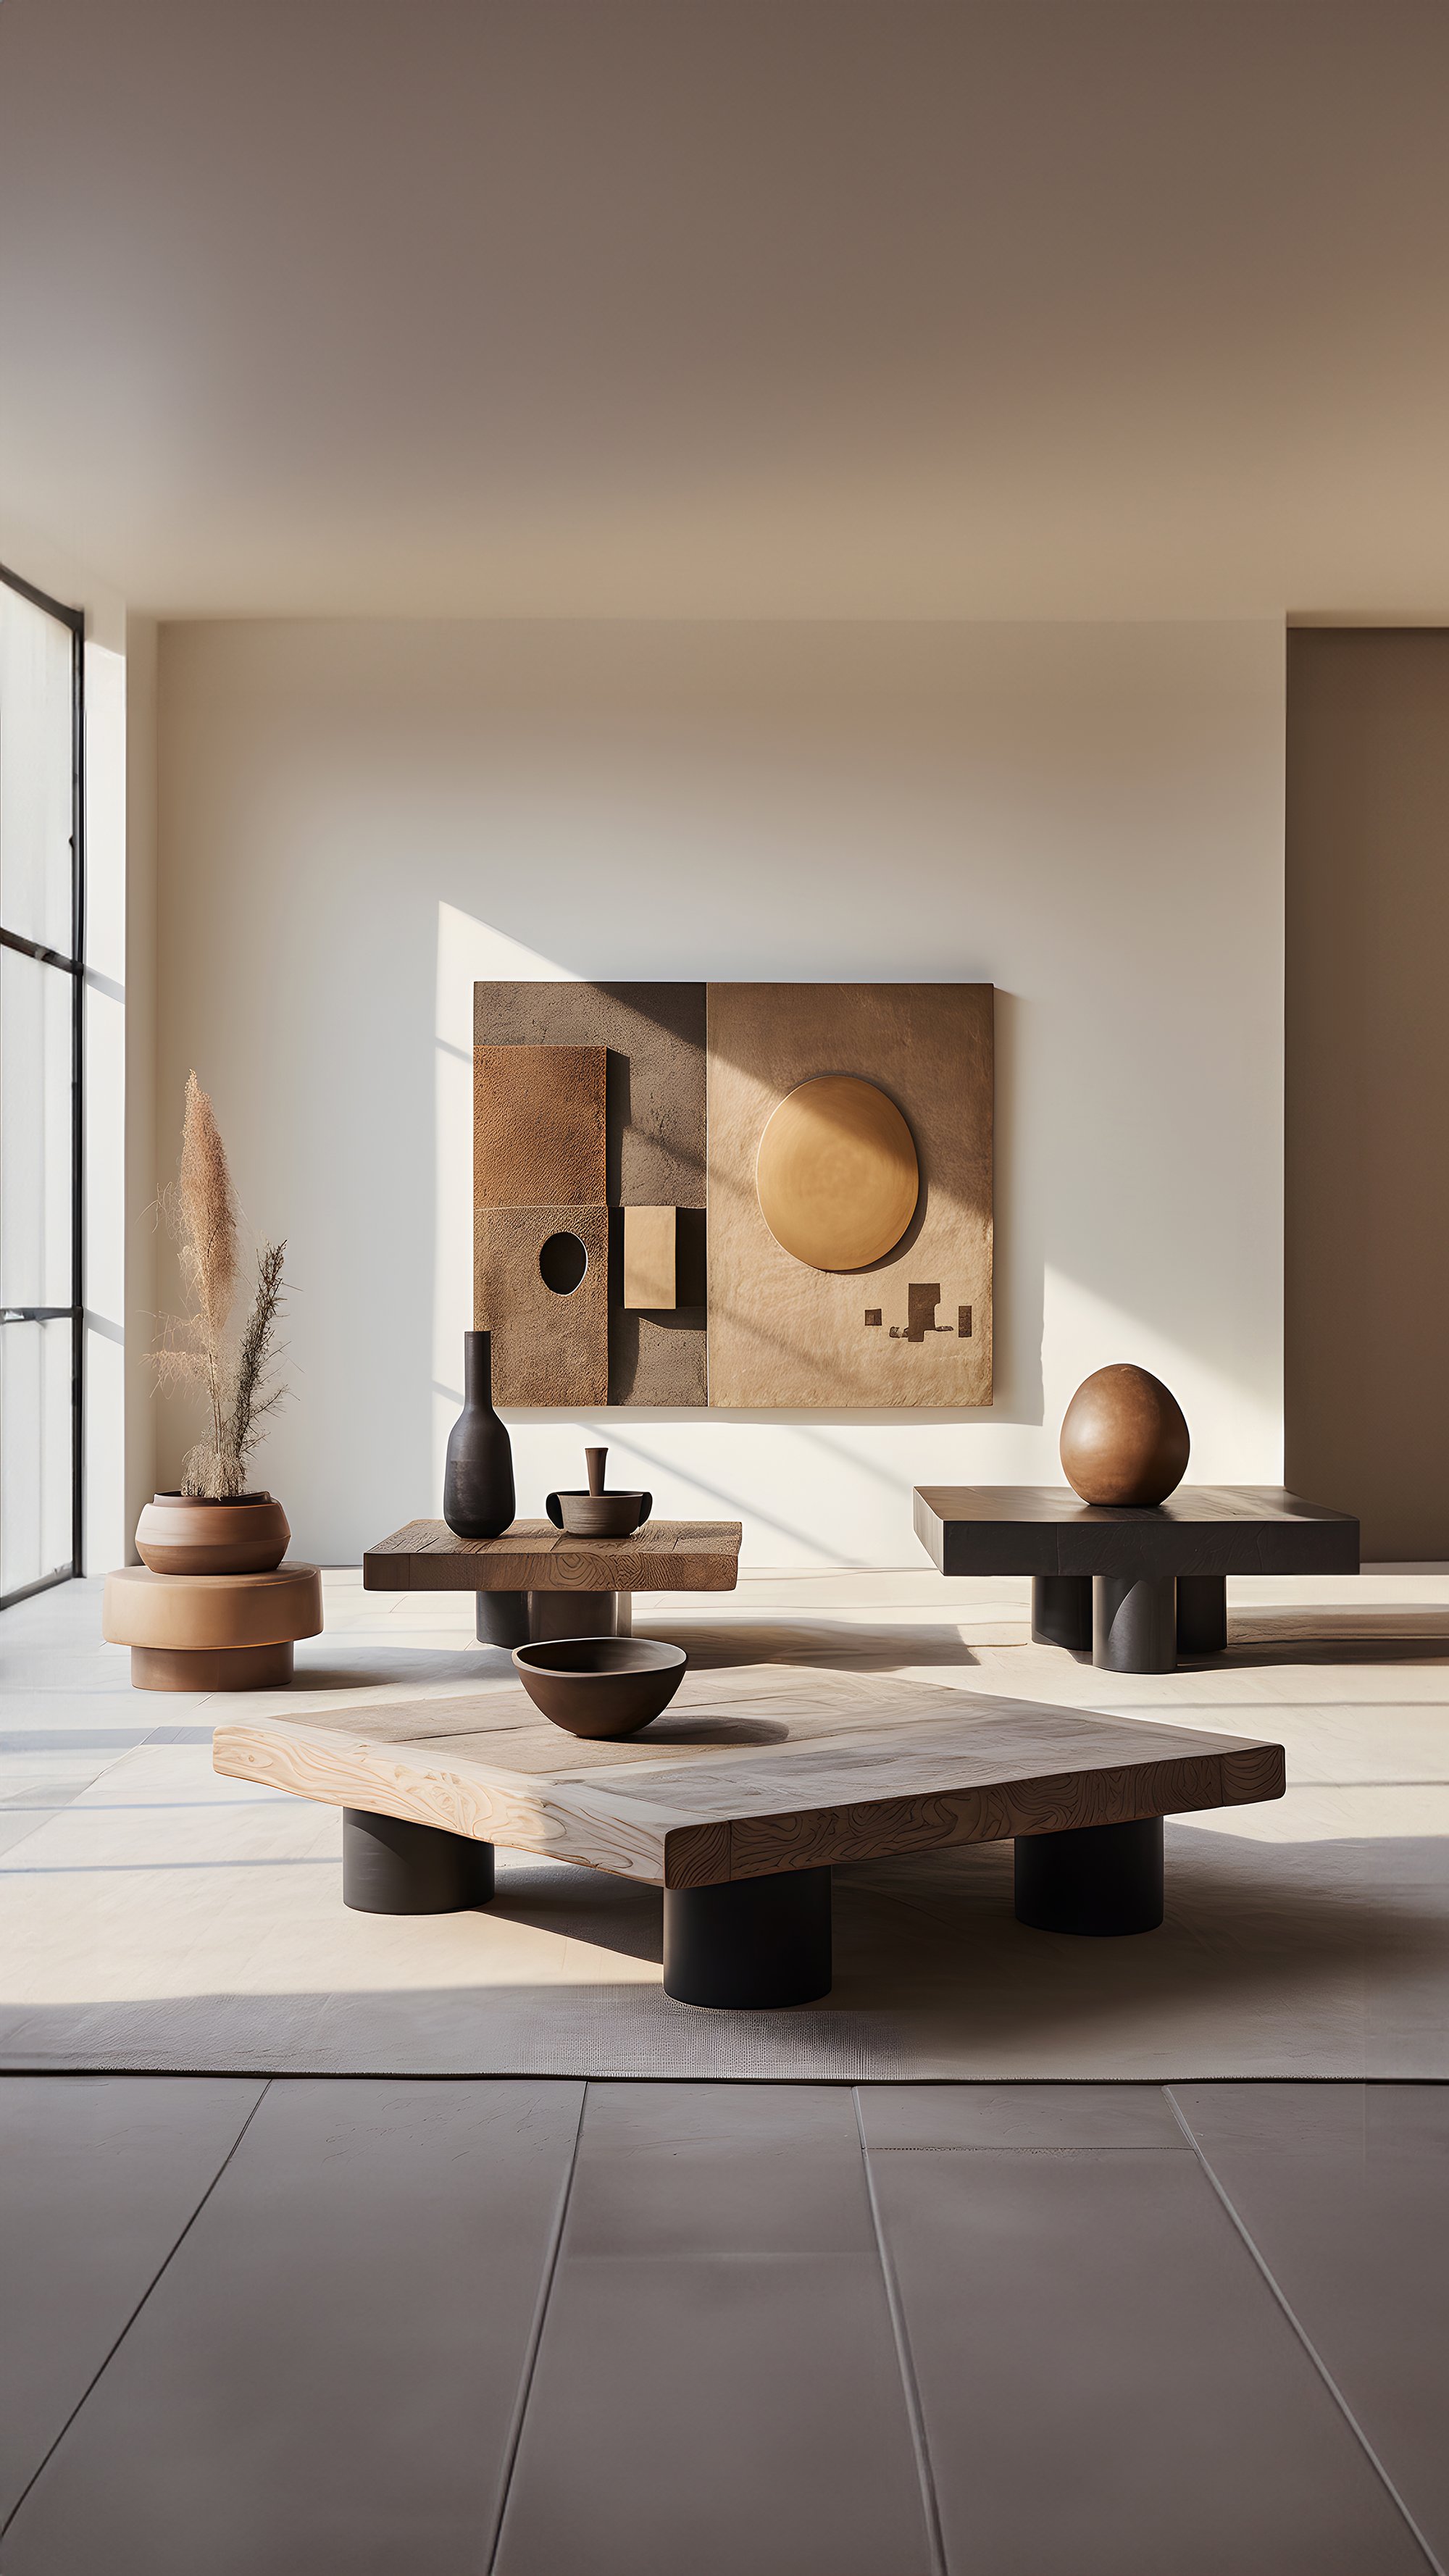 Bold Square Coffee Table in Black Tint - Architectural Fundamenta 29 by NONO — 5.jpg